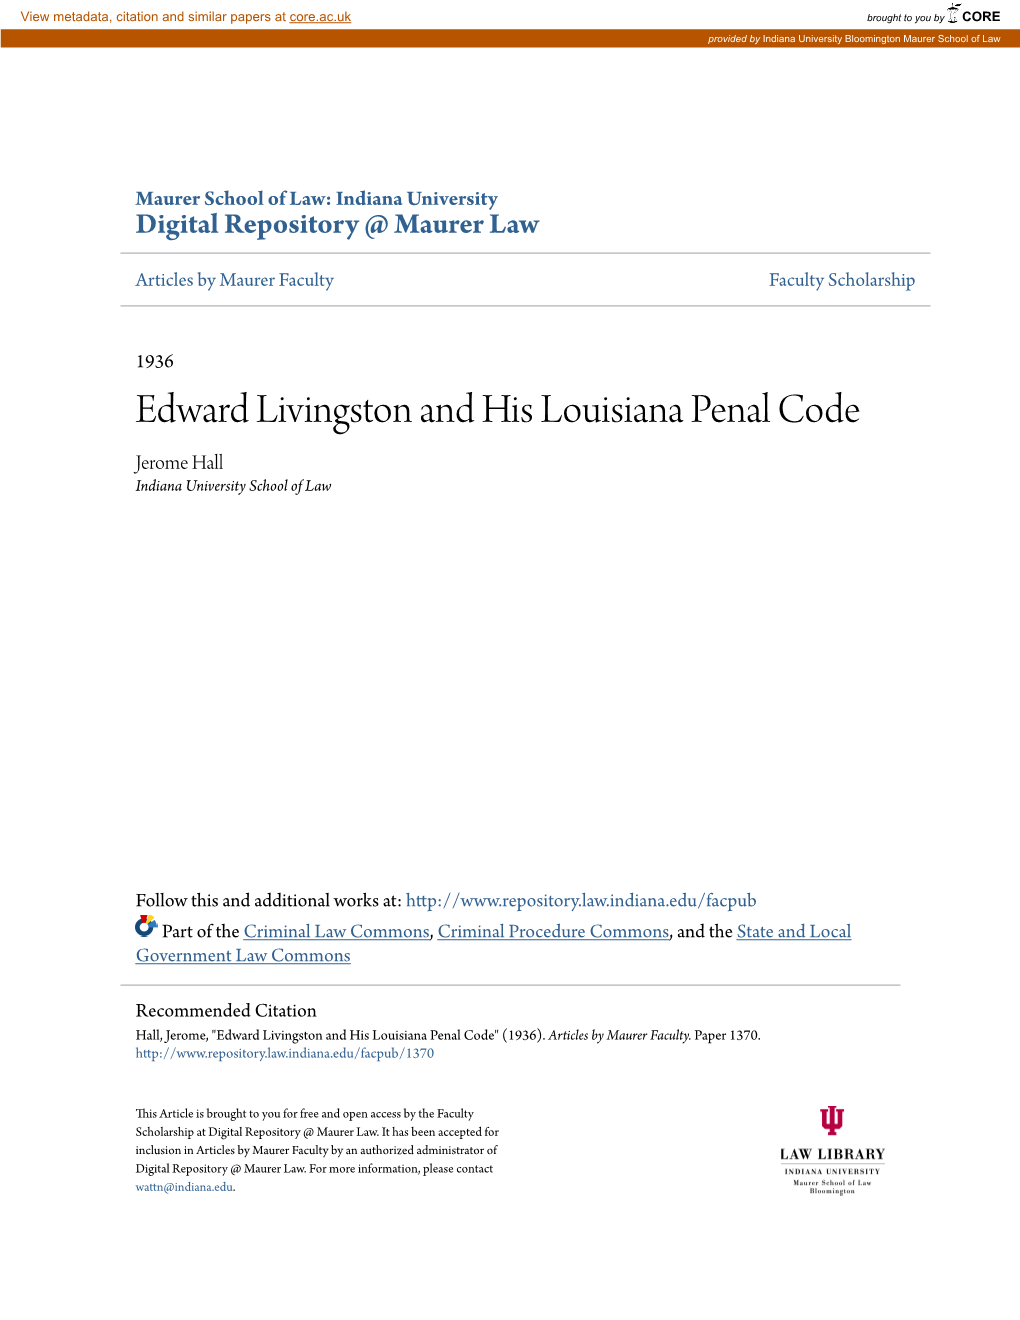 Edward Livingston and His Louisiana Penal Code Jerome Hall Indiana University School of Law